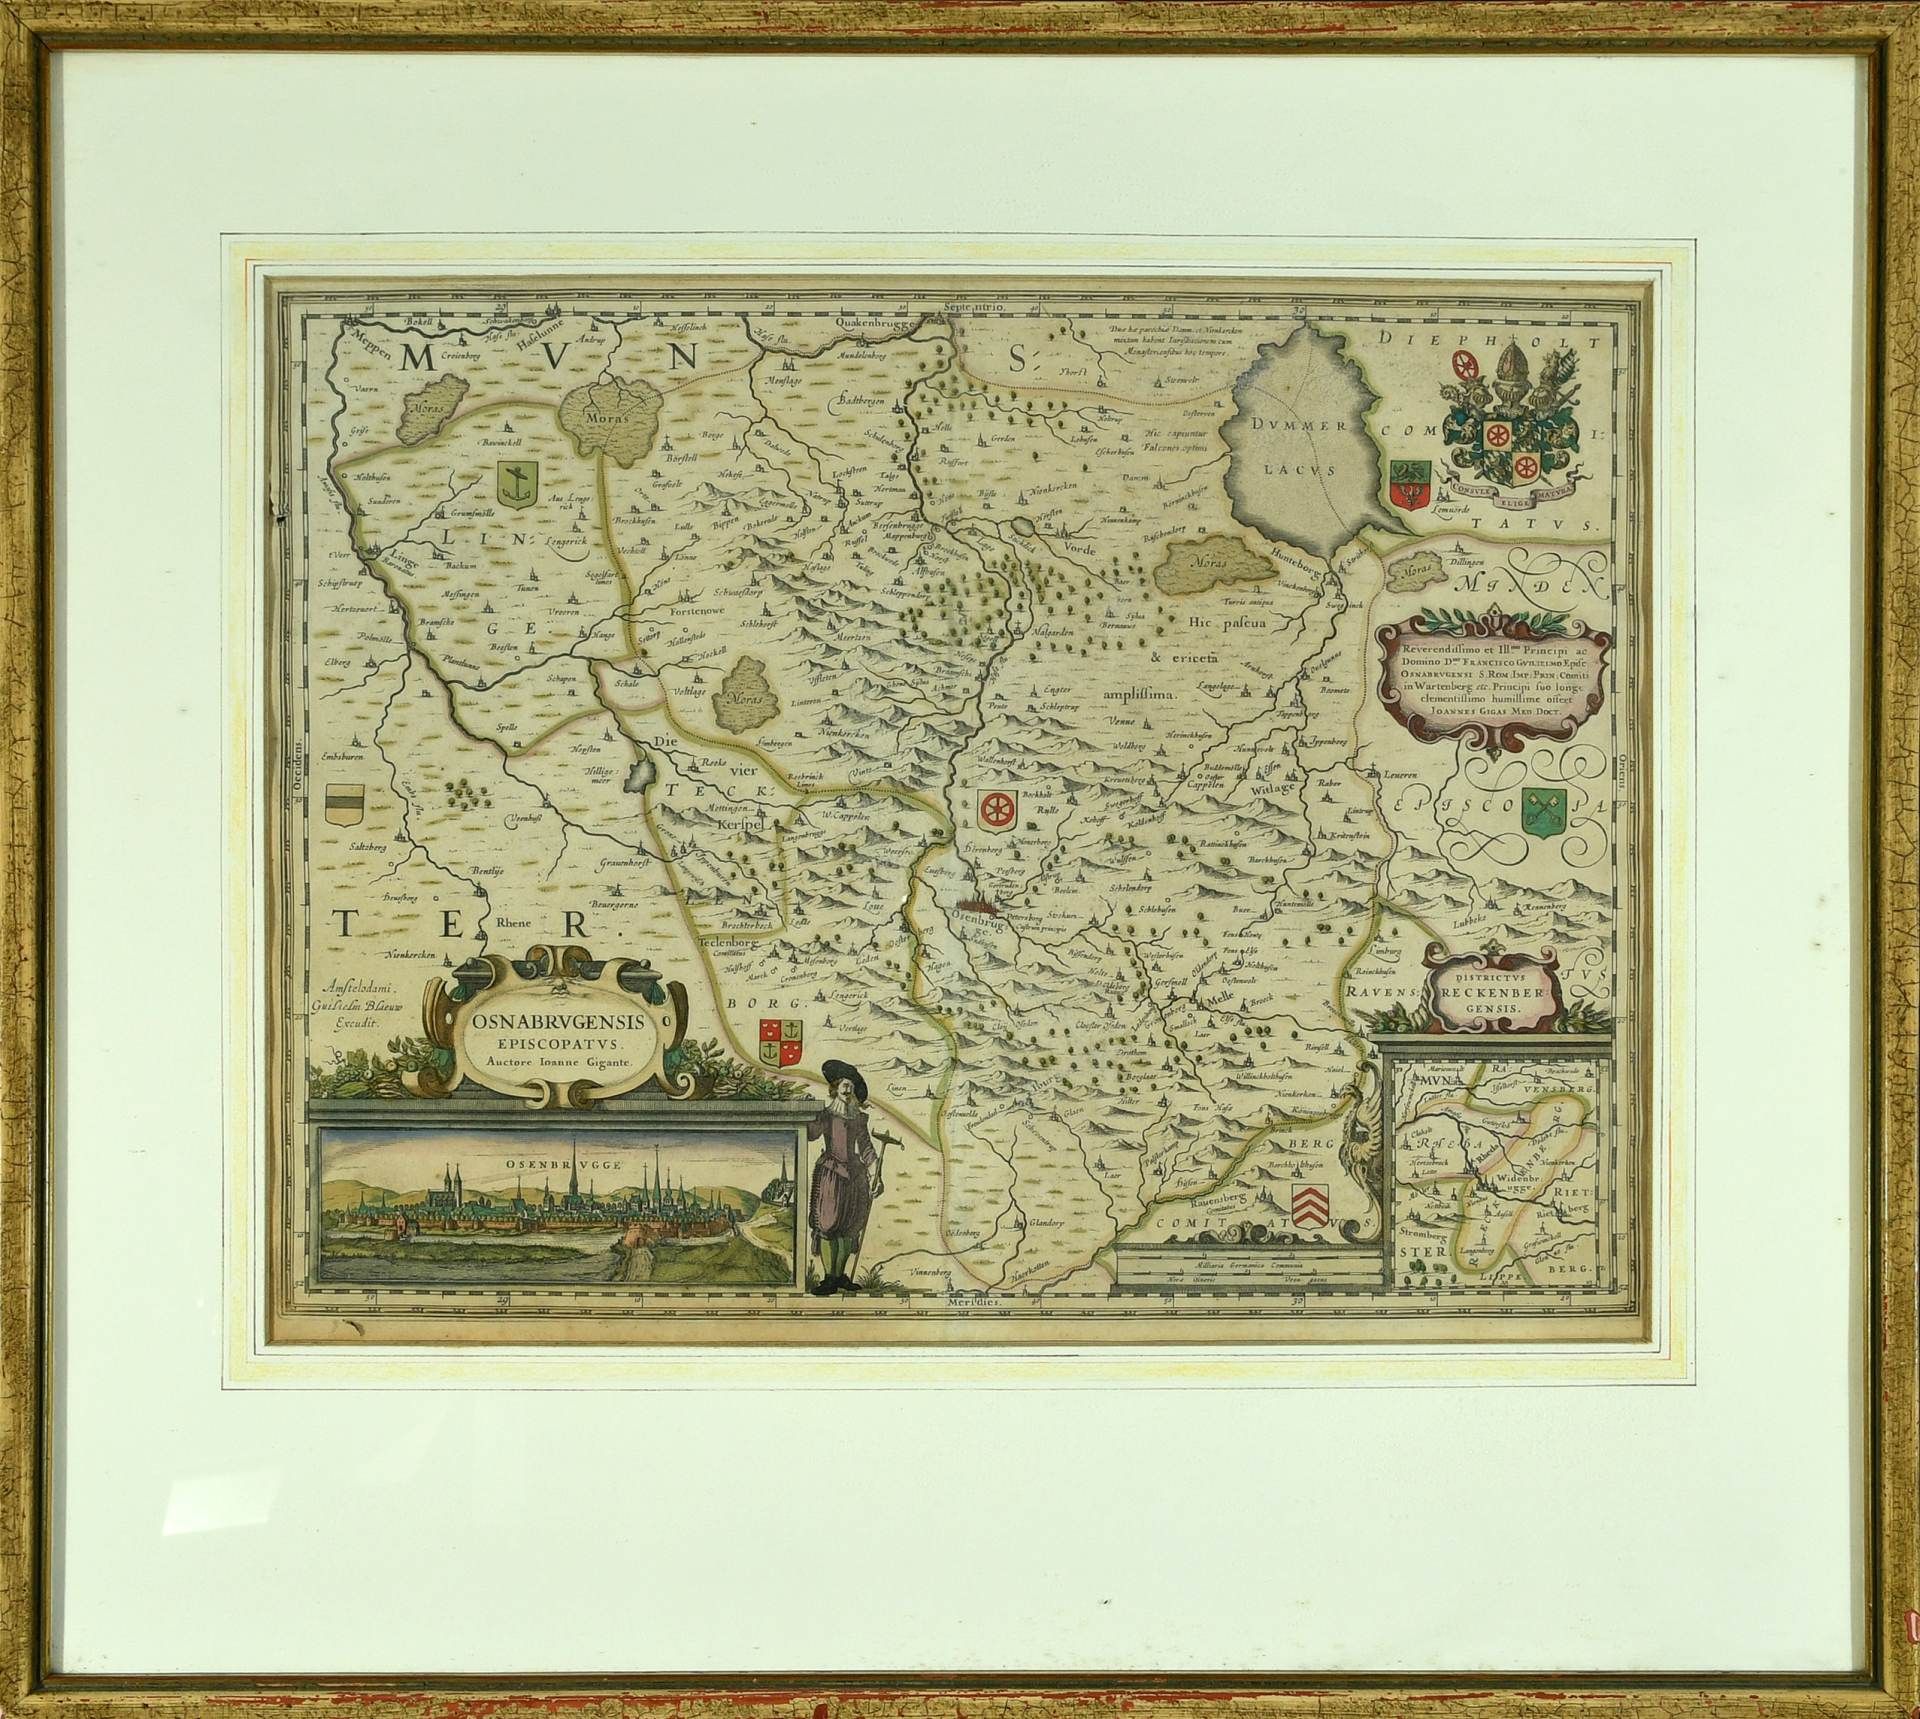 Landkarte "Osnabrugensis Episcopatus"